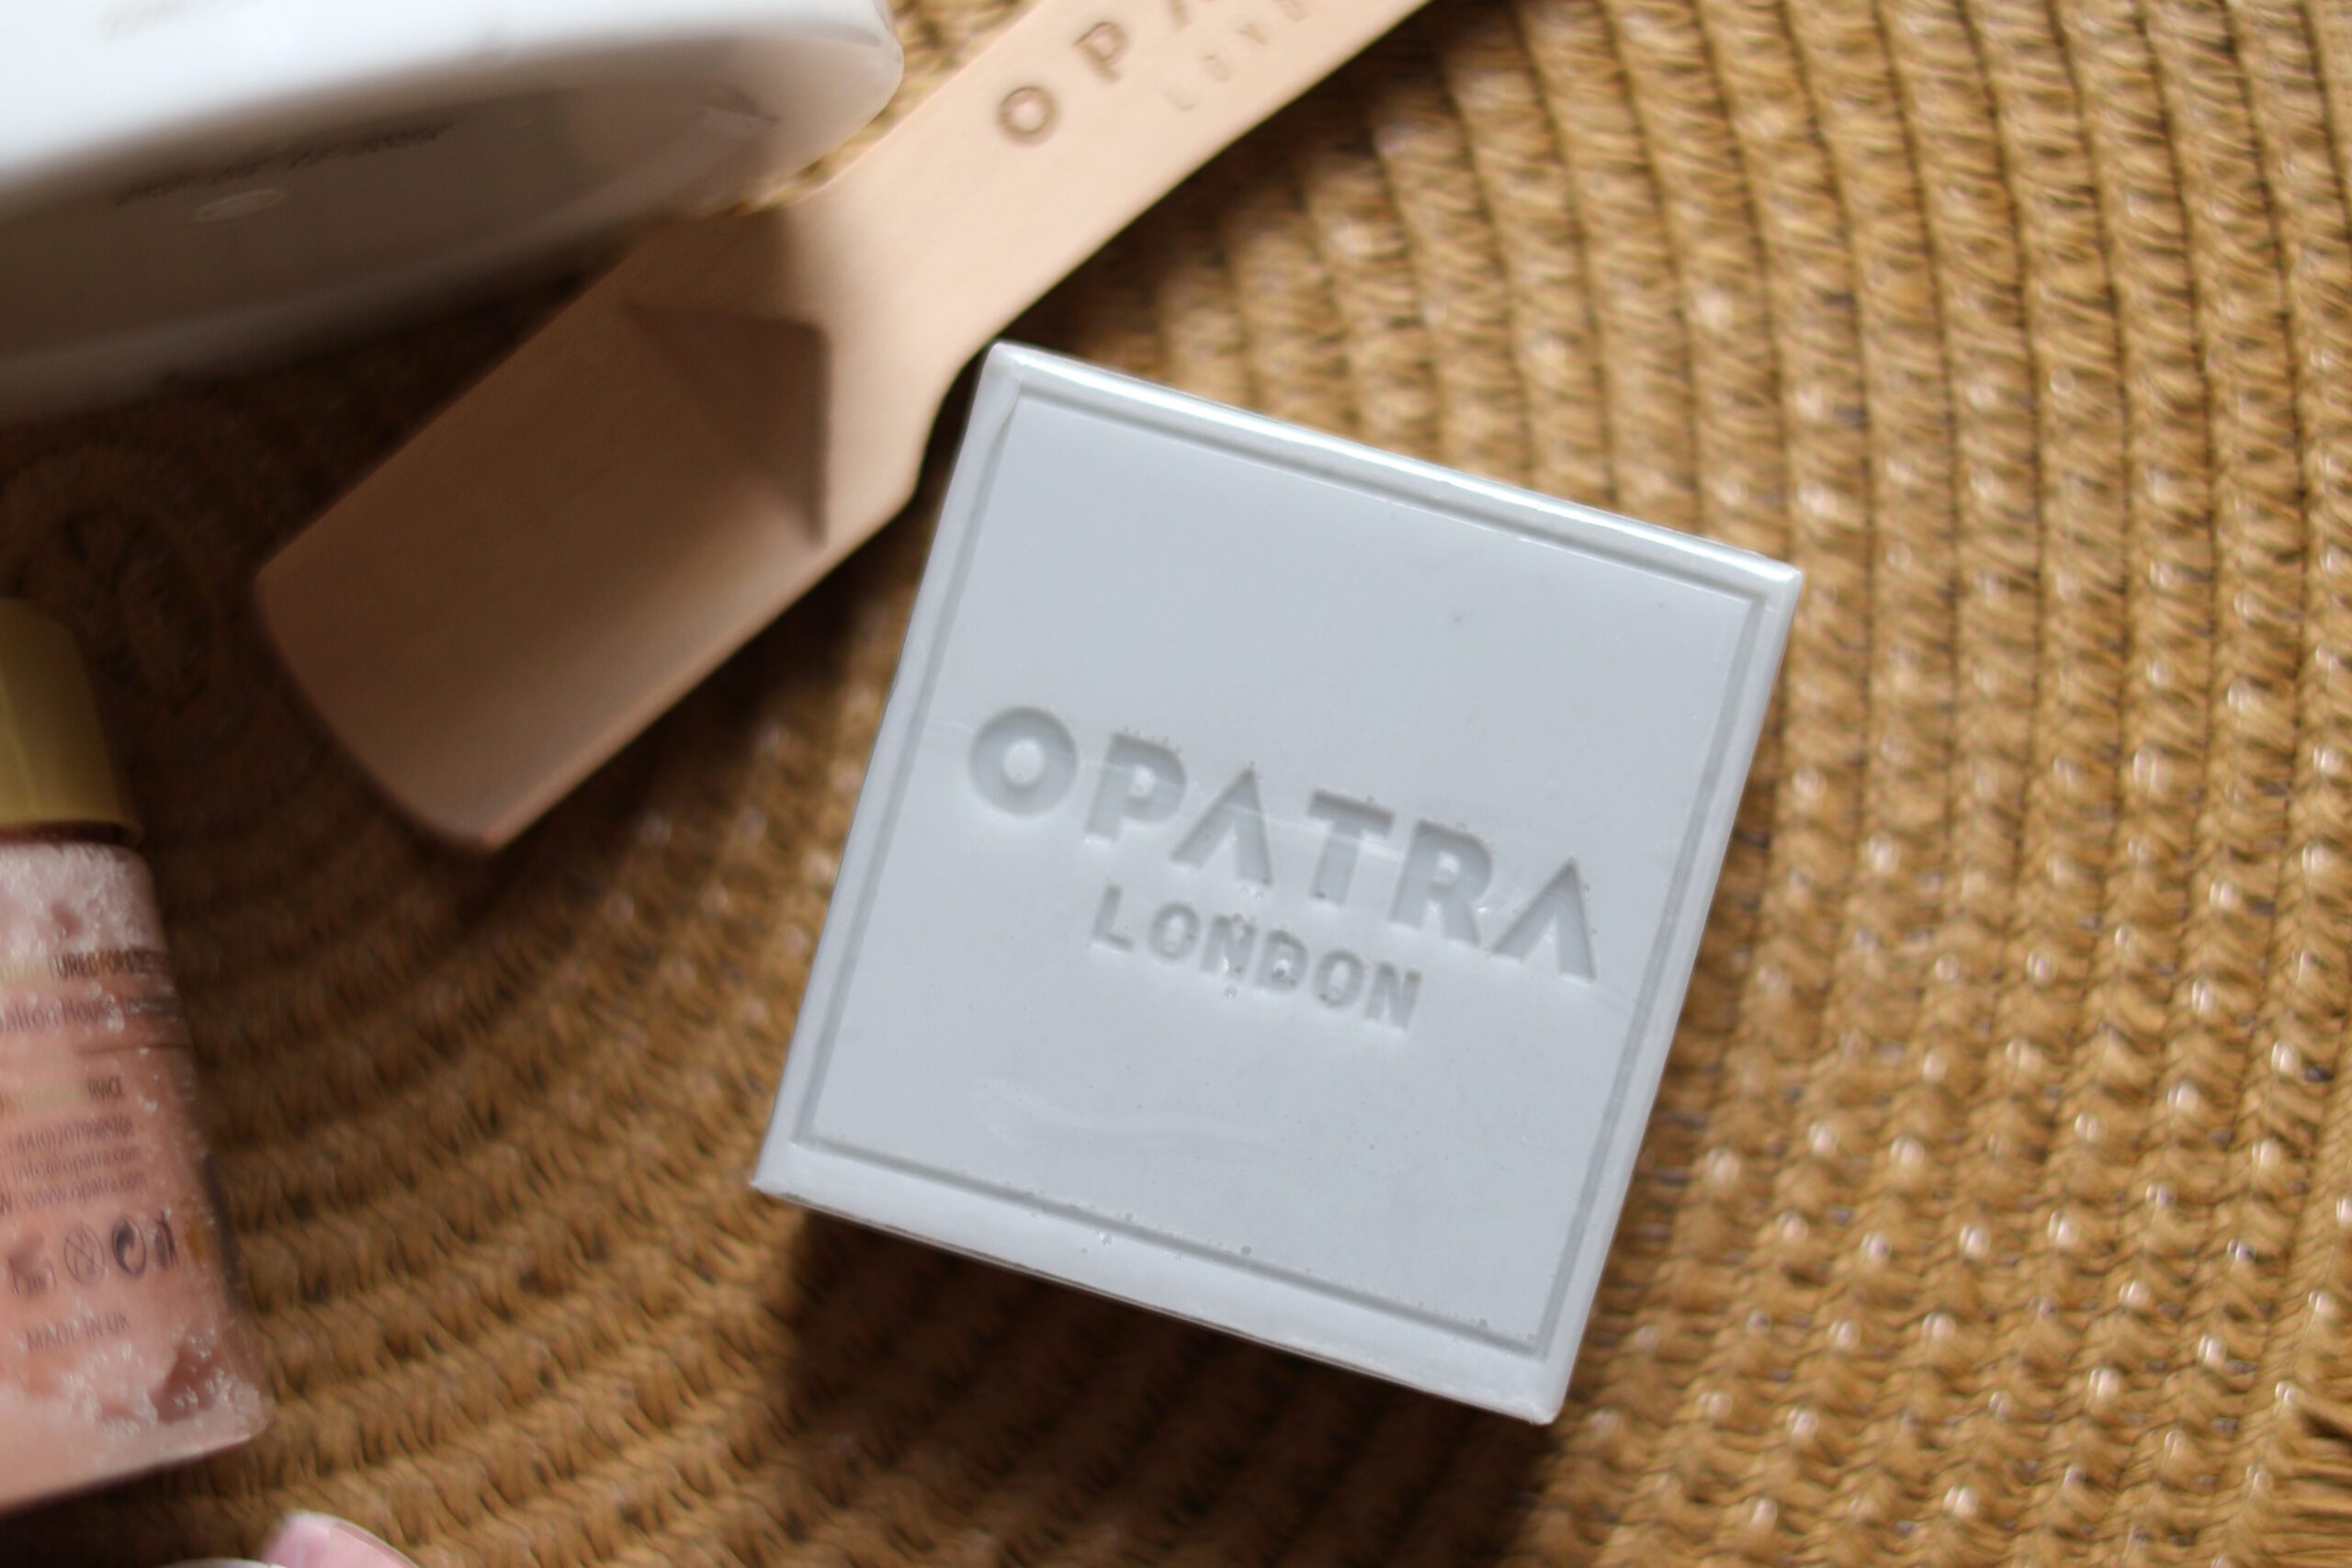 OPATRA London來自英國護膚品牌／喜瑪拉雅身體修護磨砂膏+修護滋養身體霜+火山泥手工皂／在家就可以好好的幫身體做SPA @Rosa的秘密花園